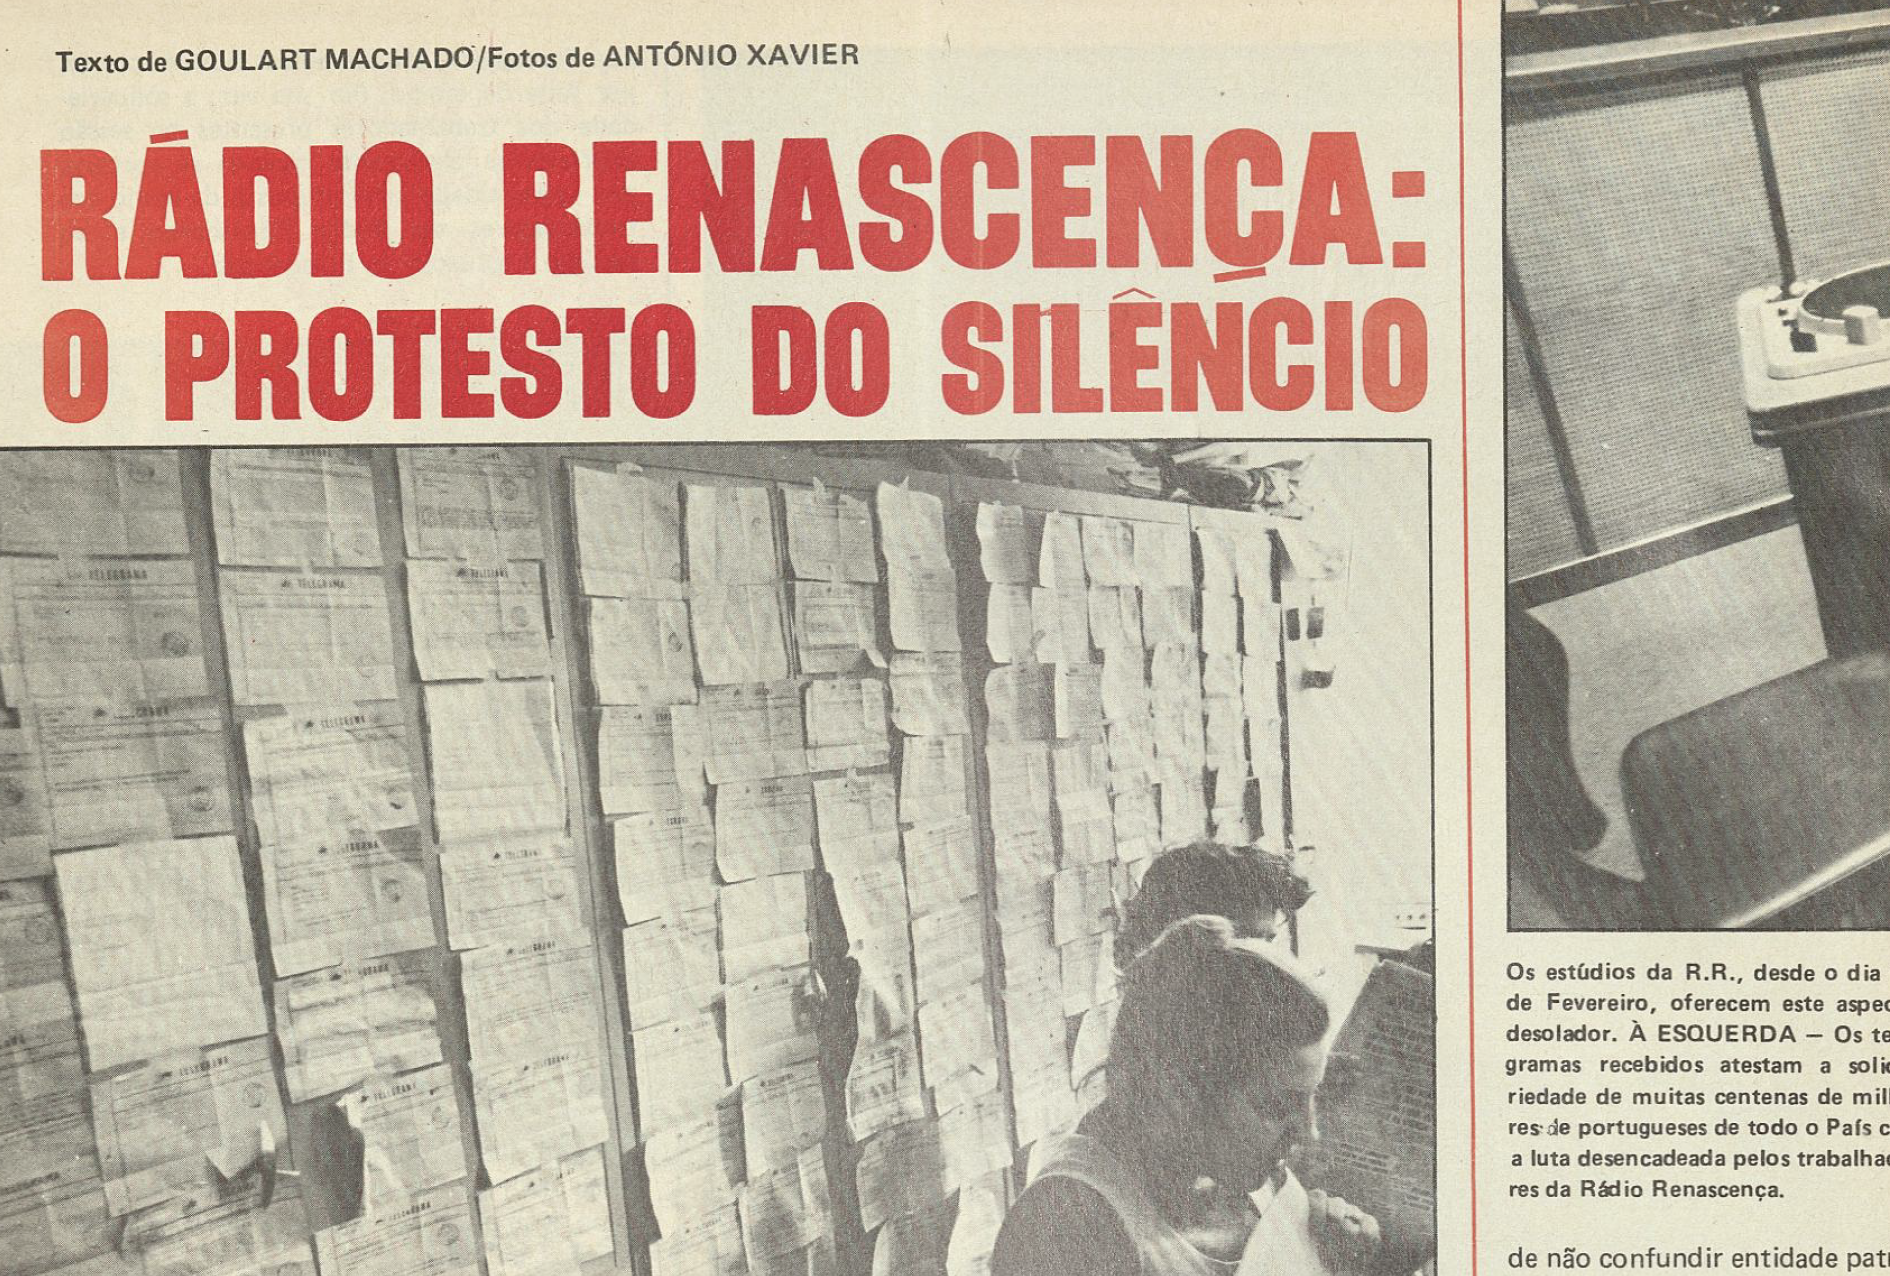 "Rádio renascença: o protesto do silêncio"